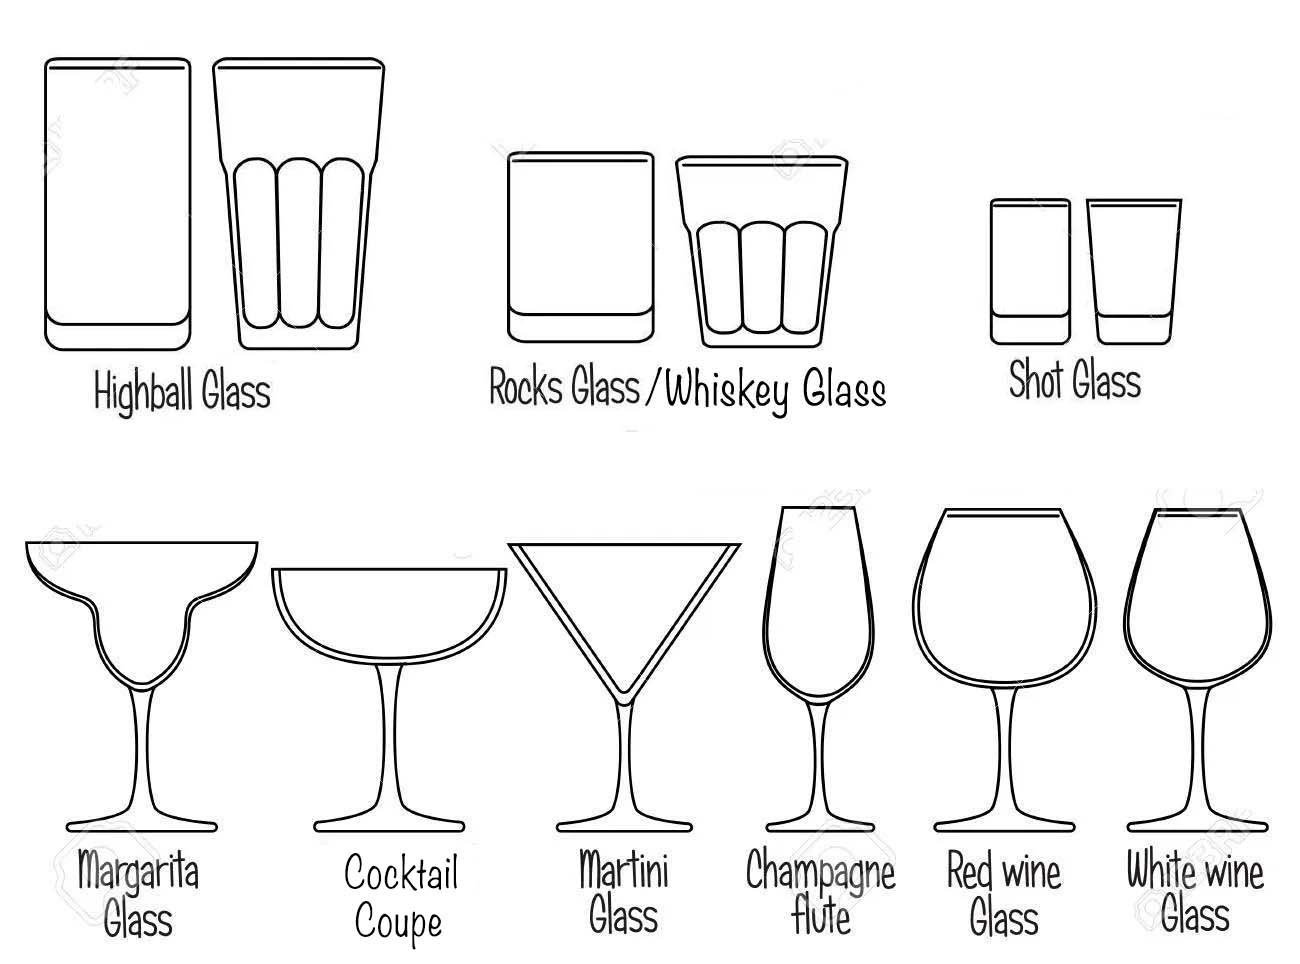 Drinkware types